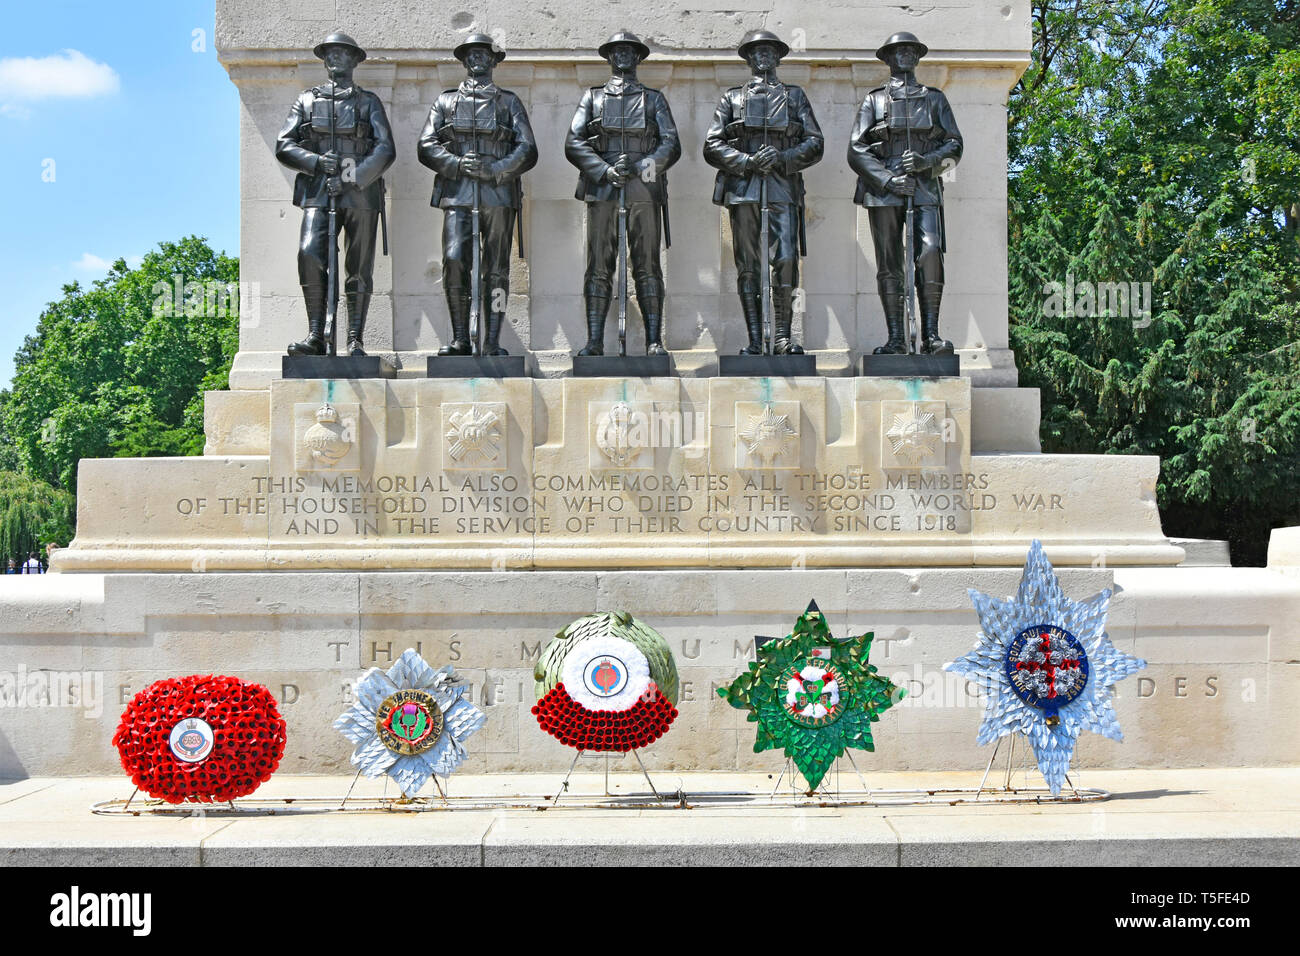 Guards war memorial first & second world war with five wreath & bronze sculpture of each foot guards regiment City of Westminster London England UK Stock Photo